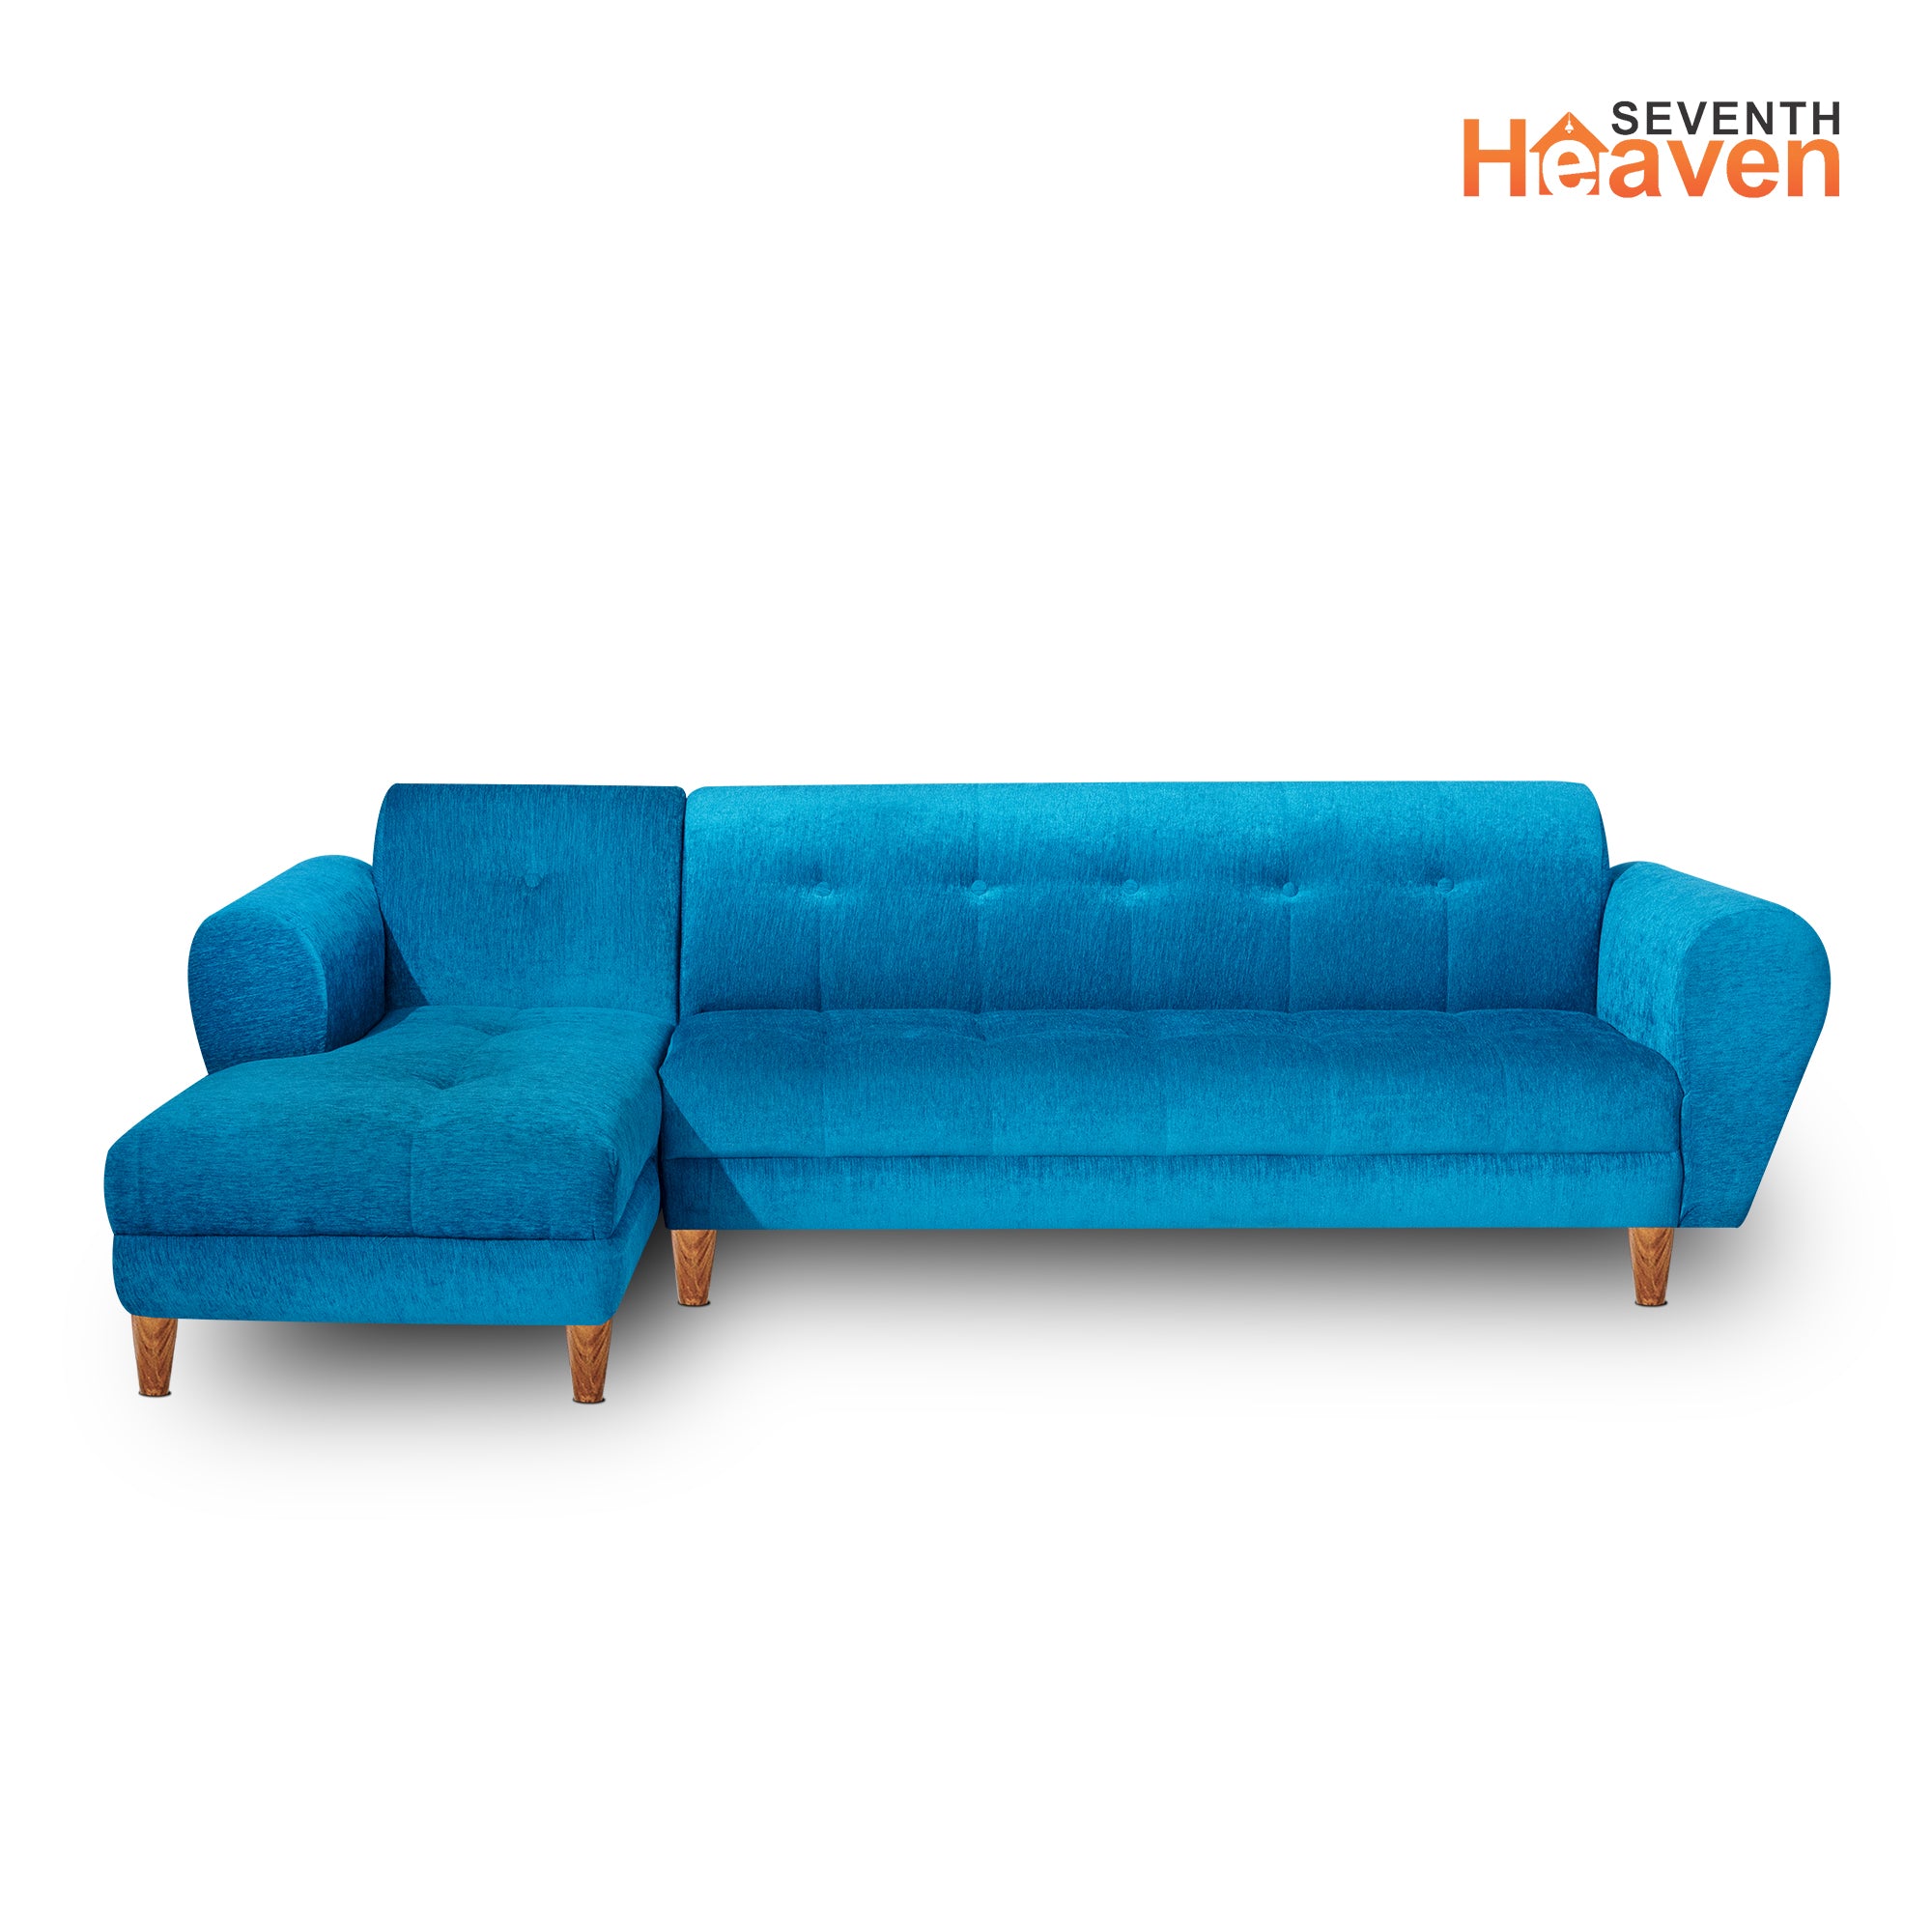 Seventh Heaven Milan 6 Seater Sofa, Extra Spacious, Chenille Molfino Fabric: 3 Year Warranty Fabric 6 Seater Sofa  (Finish Color - Sky Blue, DIY(Do-It-Yourself))